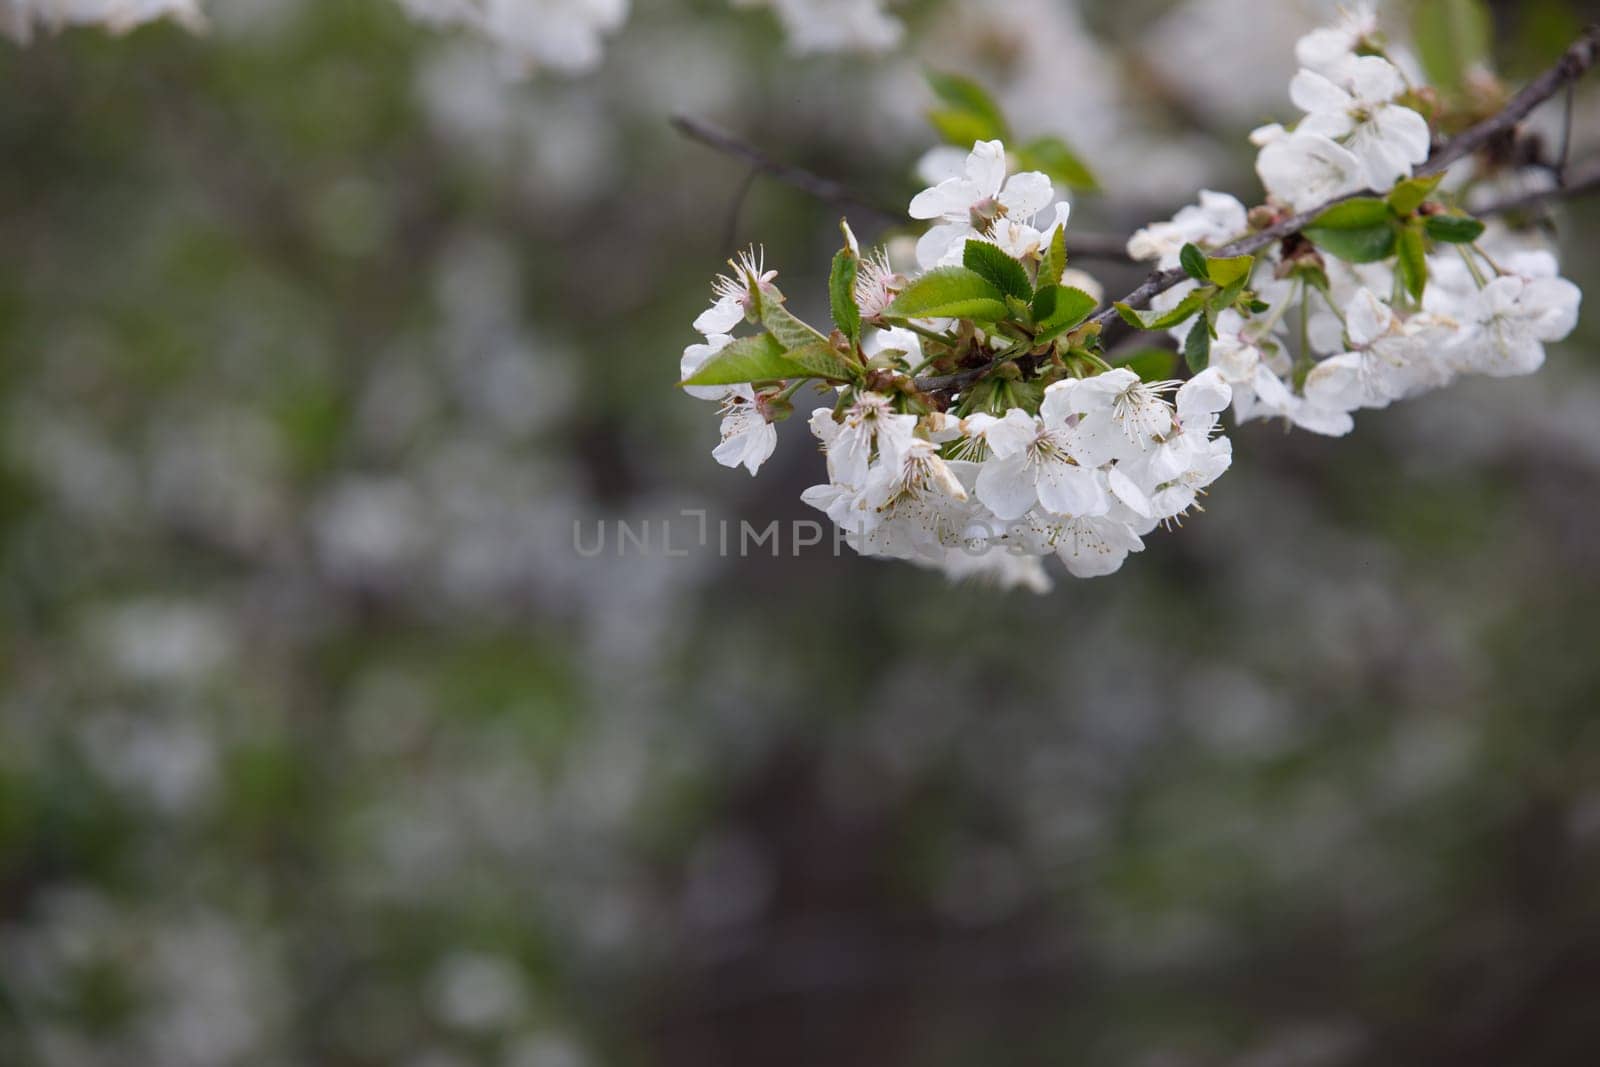 white cherry blossom nature comes to life. High quality photo